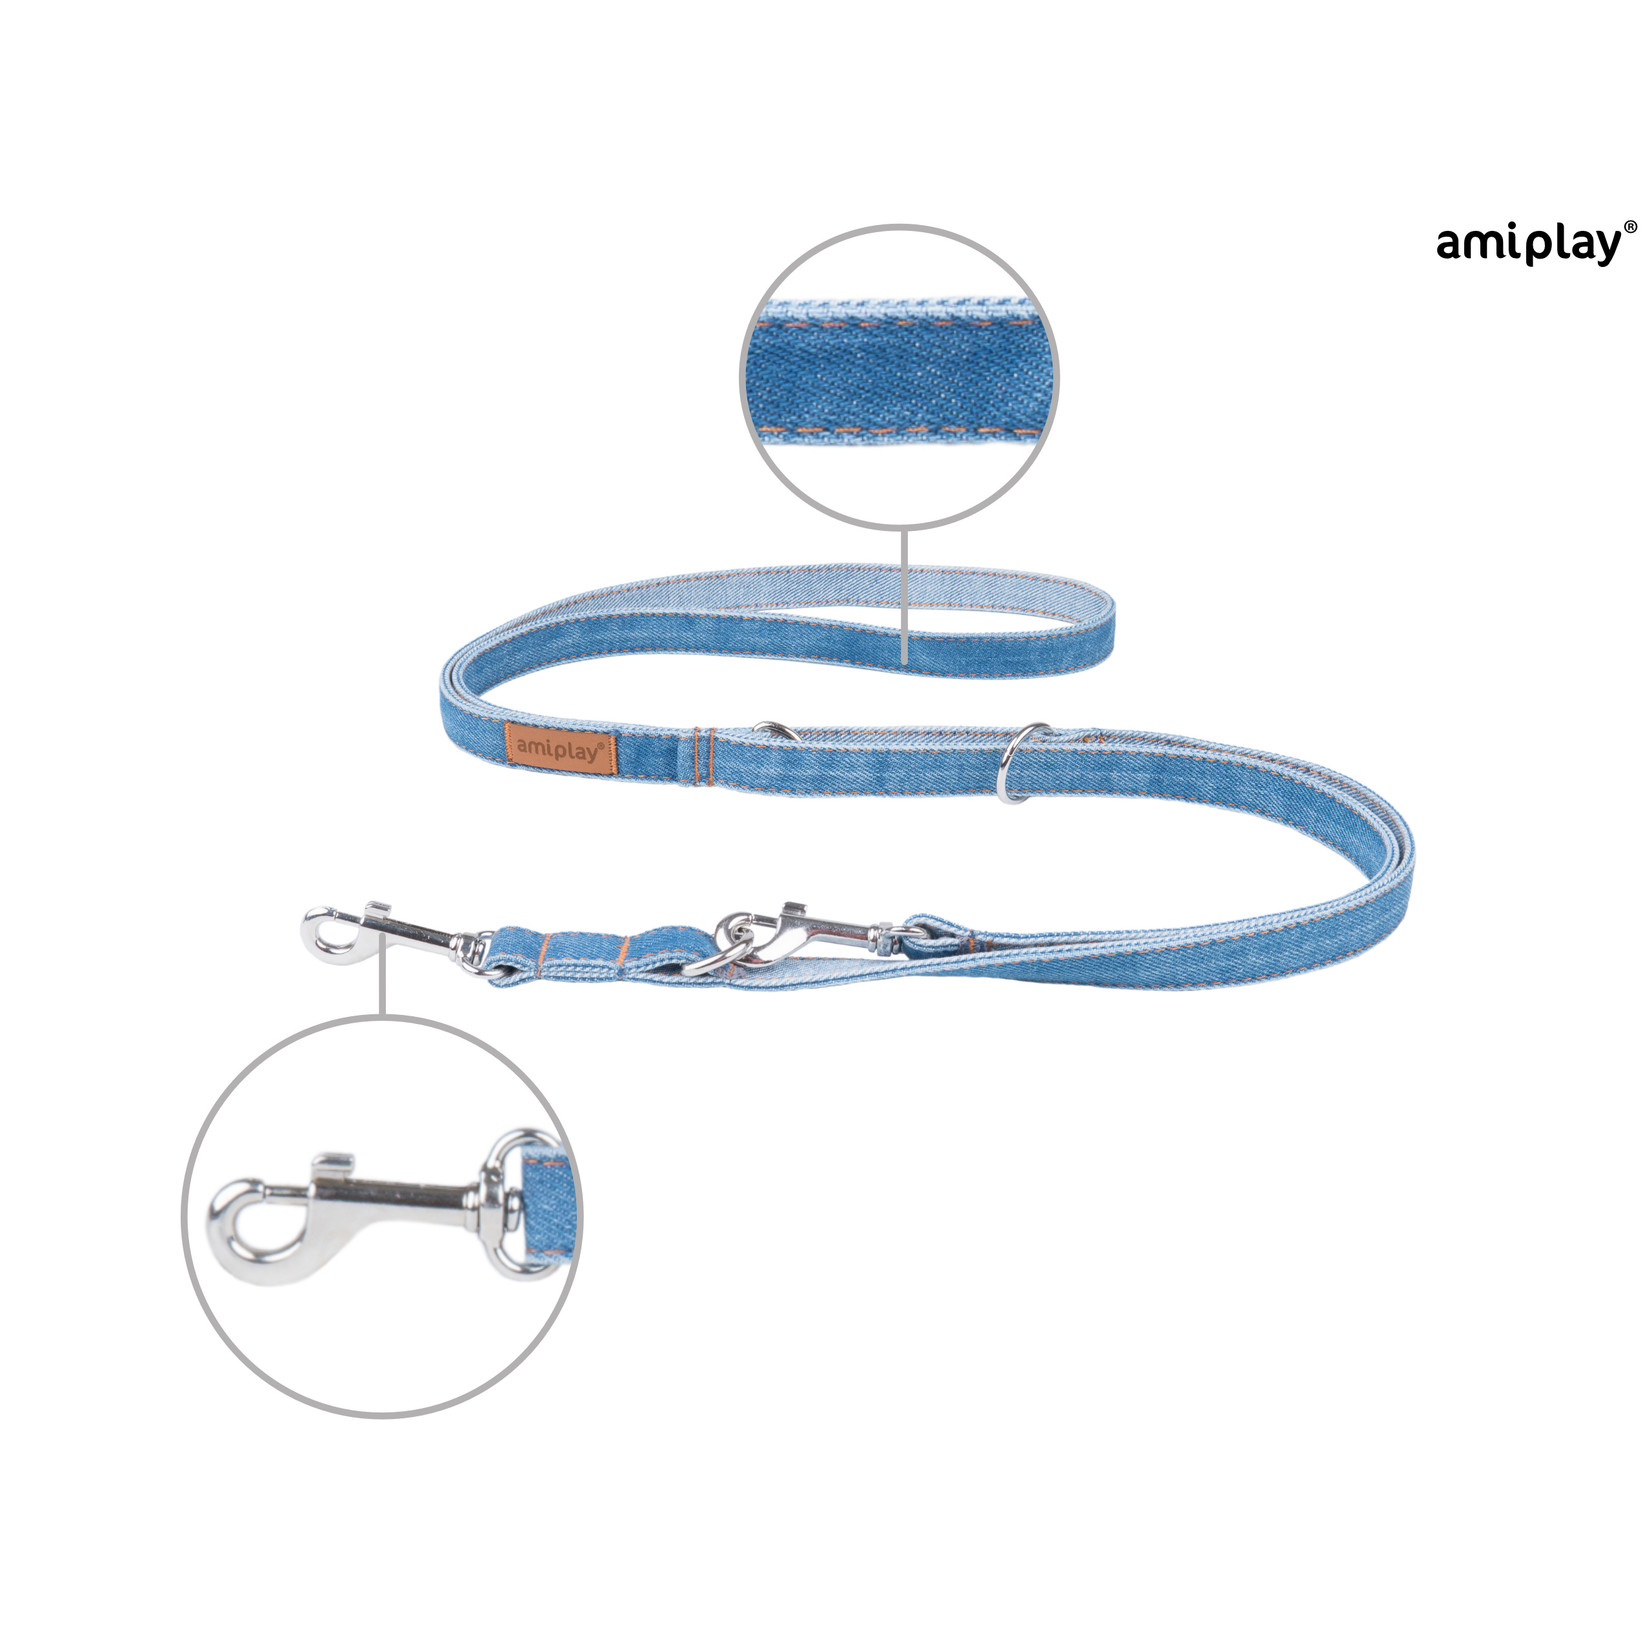 Amiplay Leiband verstelbaar 6in1 Denim blauw  maat-M / 100-200x1,5cm